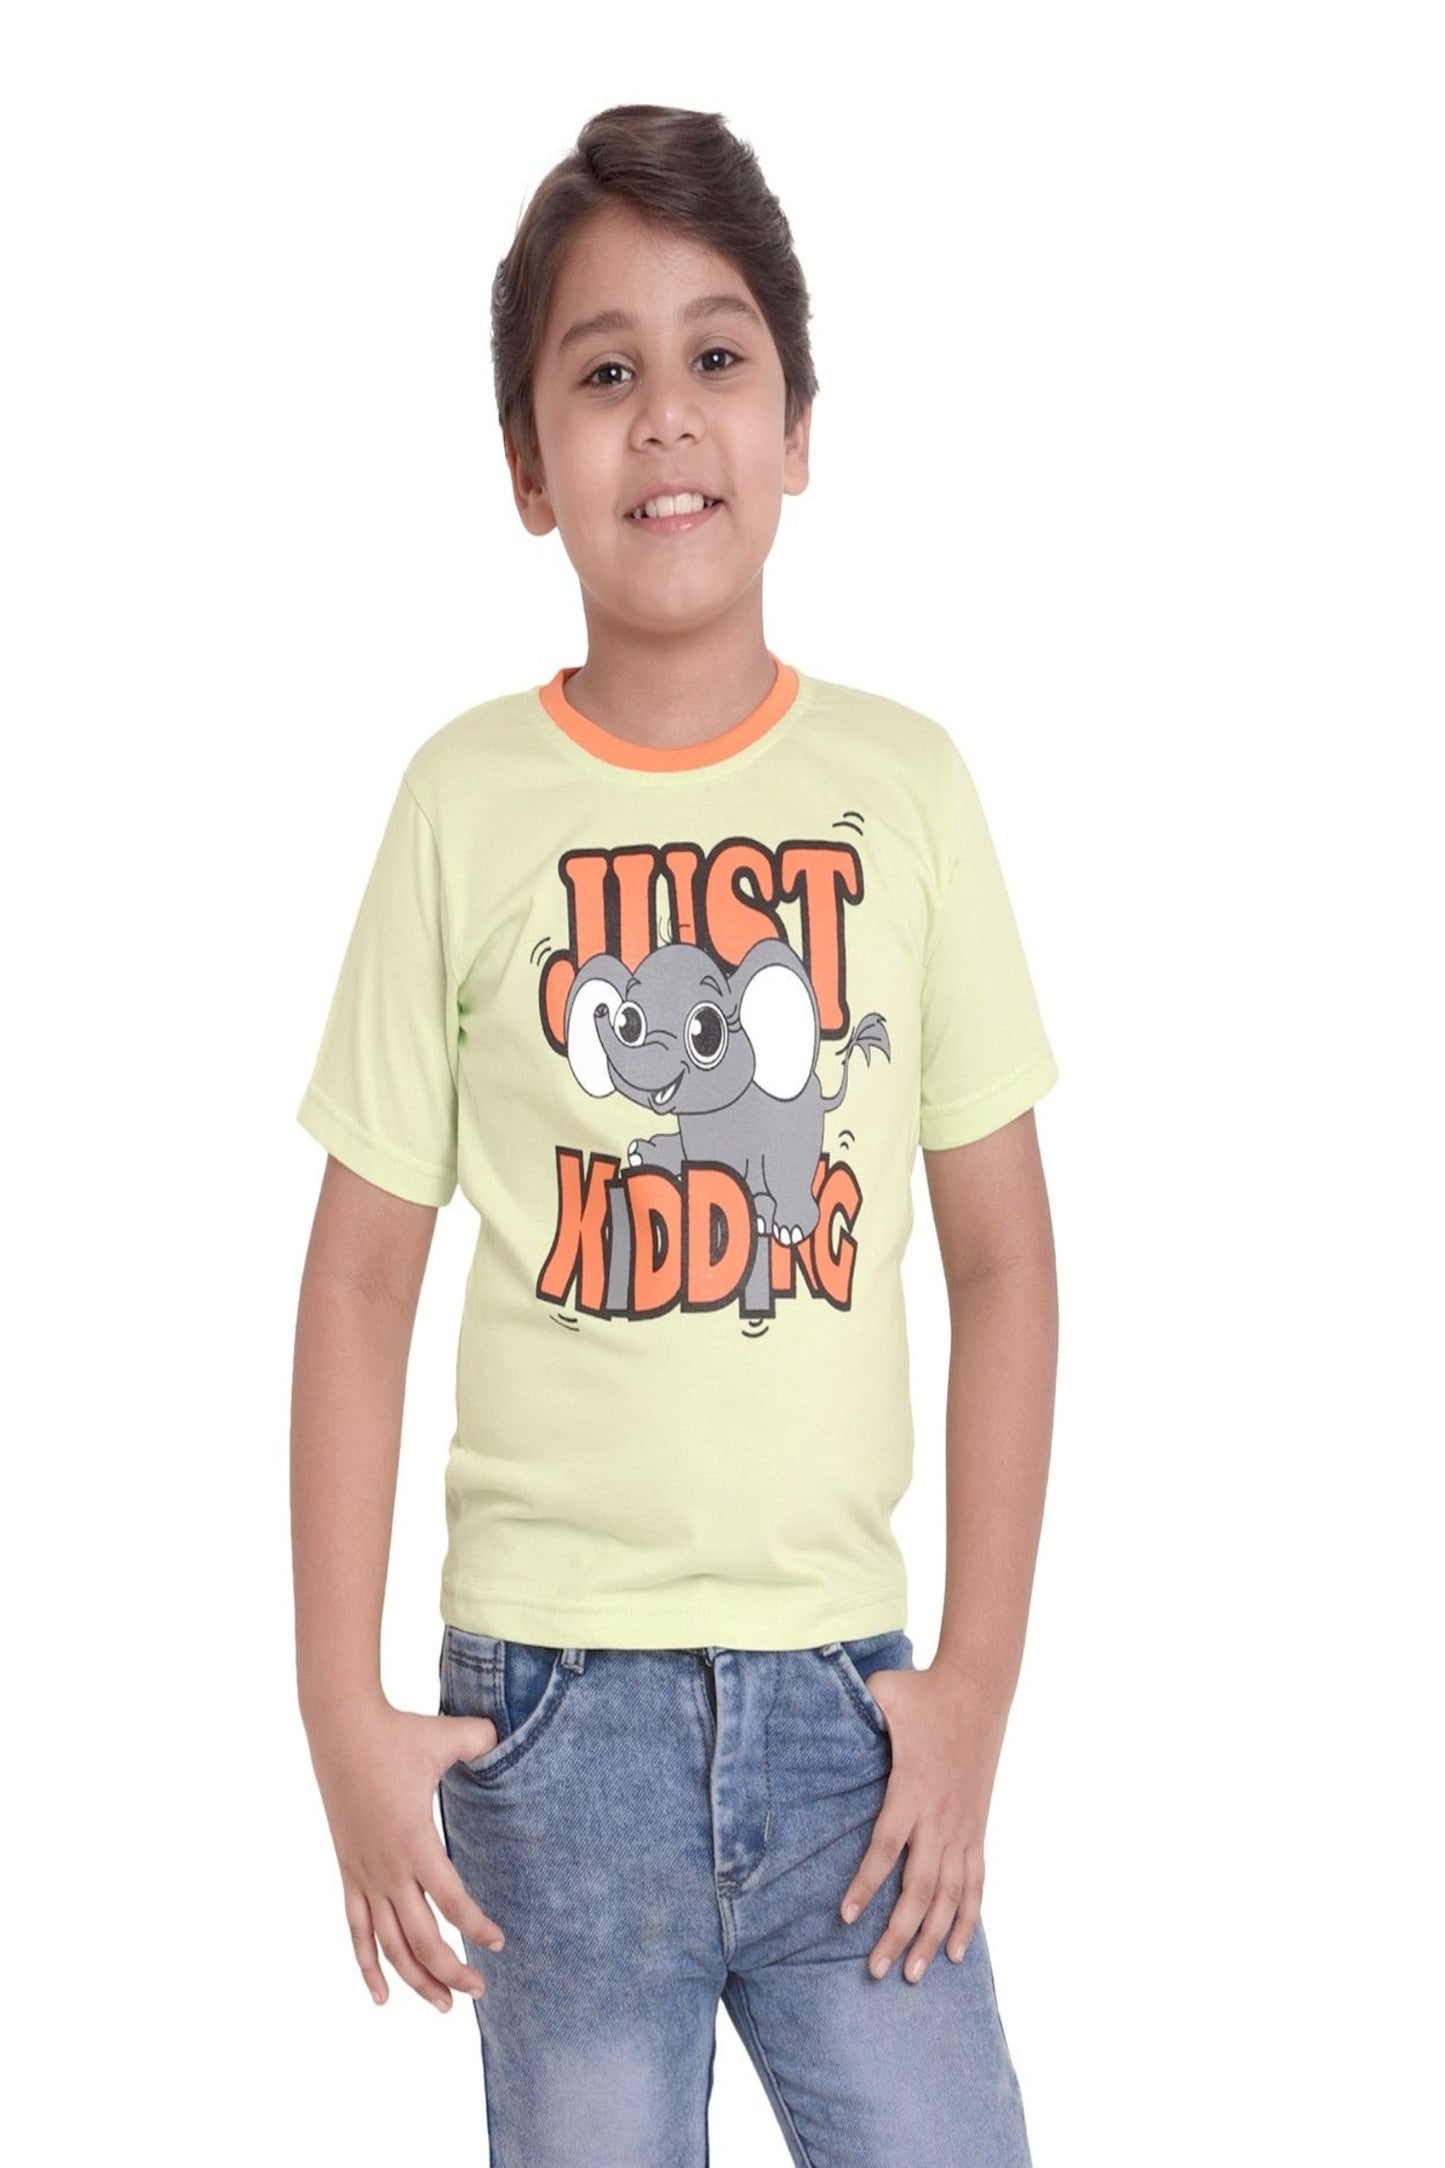 Kids Unisex Round Neck Printed Cotton T-shirt - JUST KIDDING print, front view